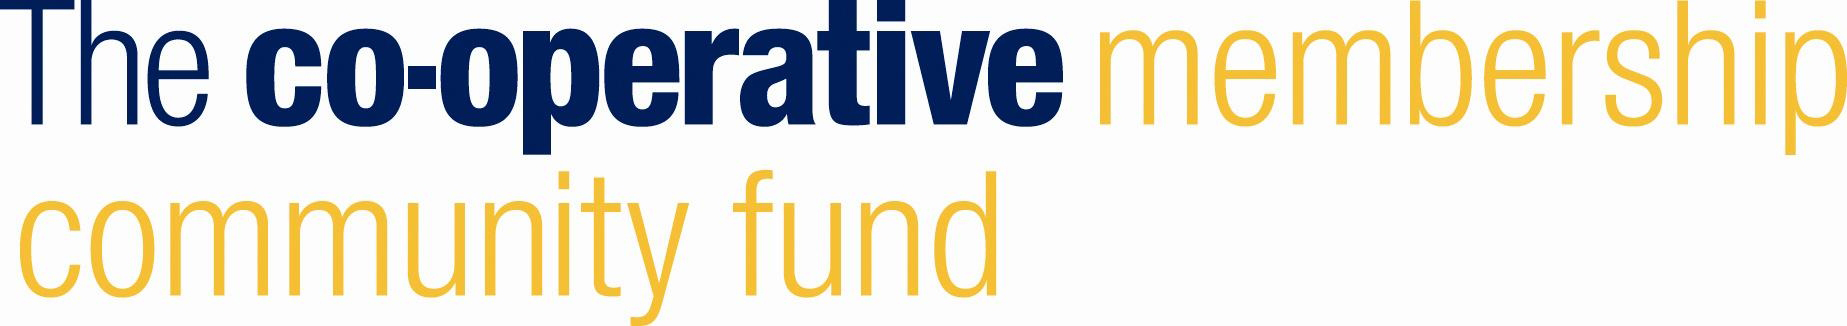 Co-operative Membership Community Fund Logo